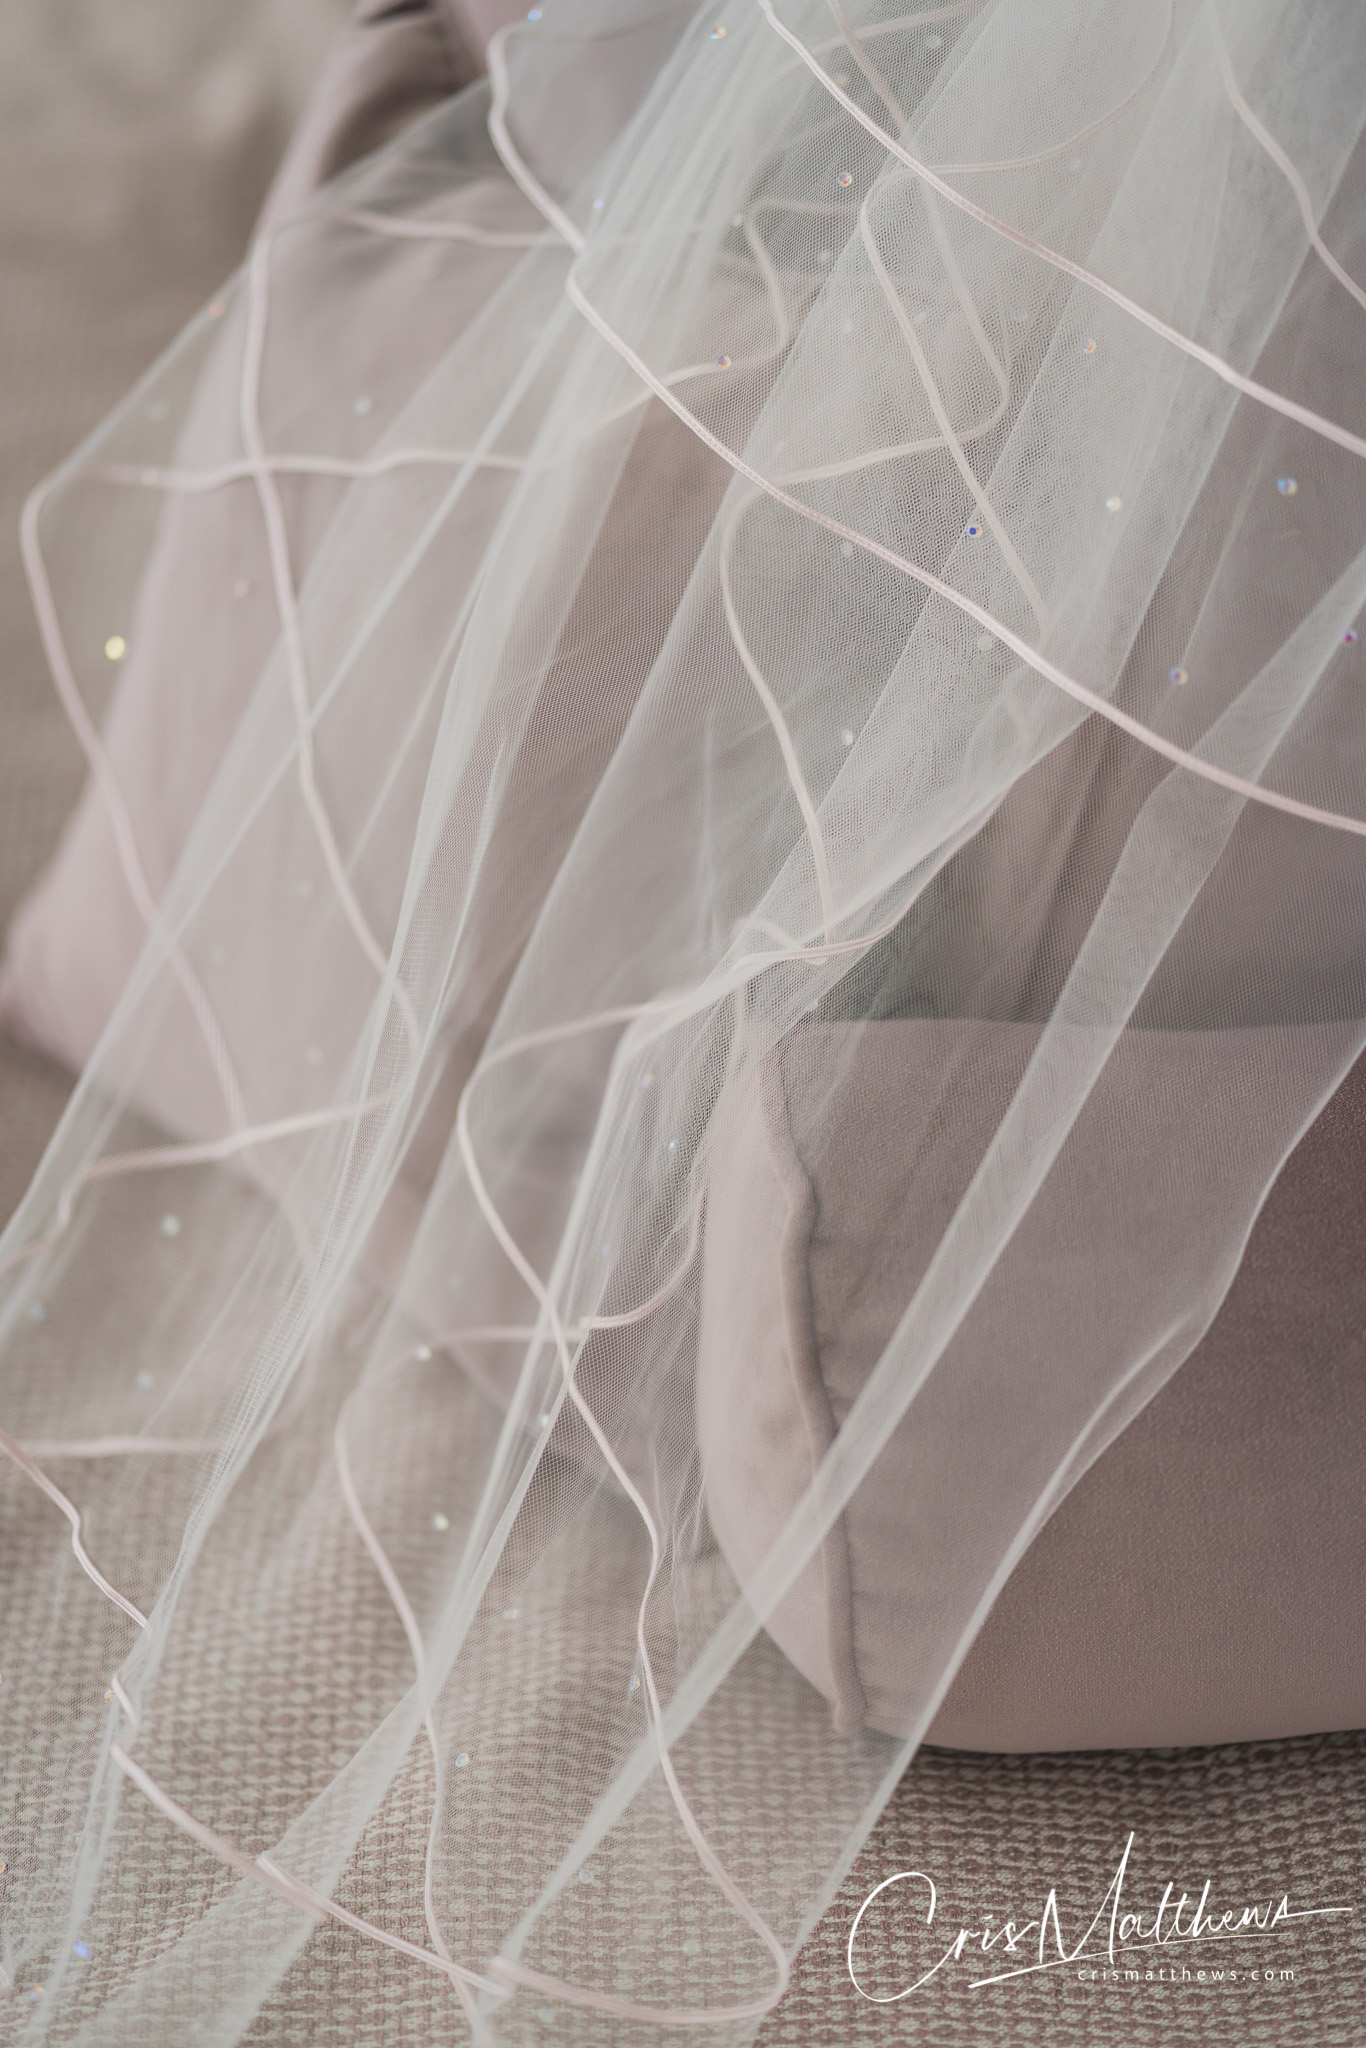 Bridal Veil at Hawkstone Hall Wedding Photography